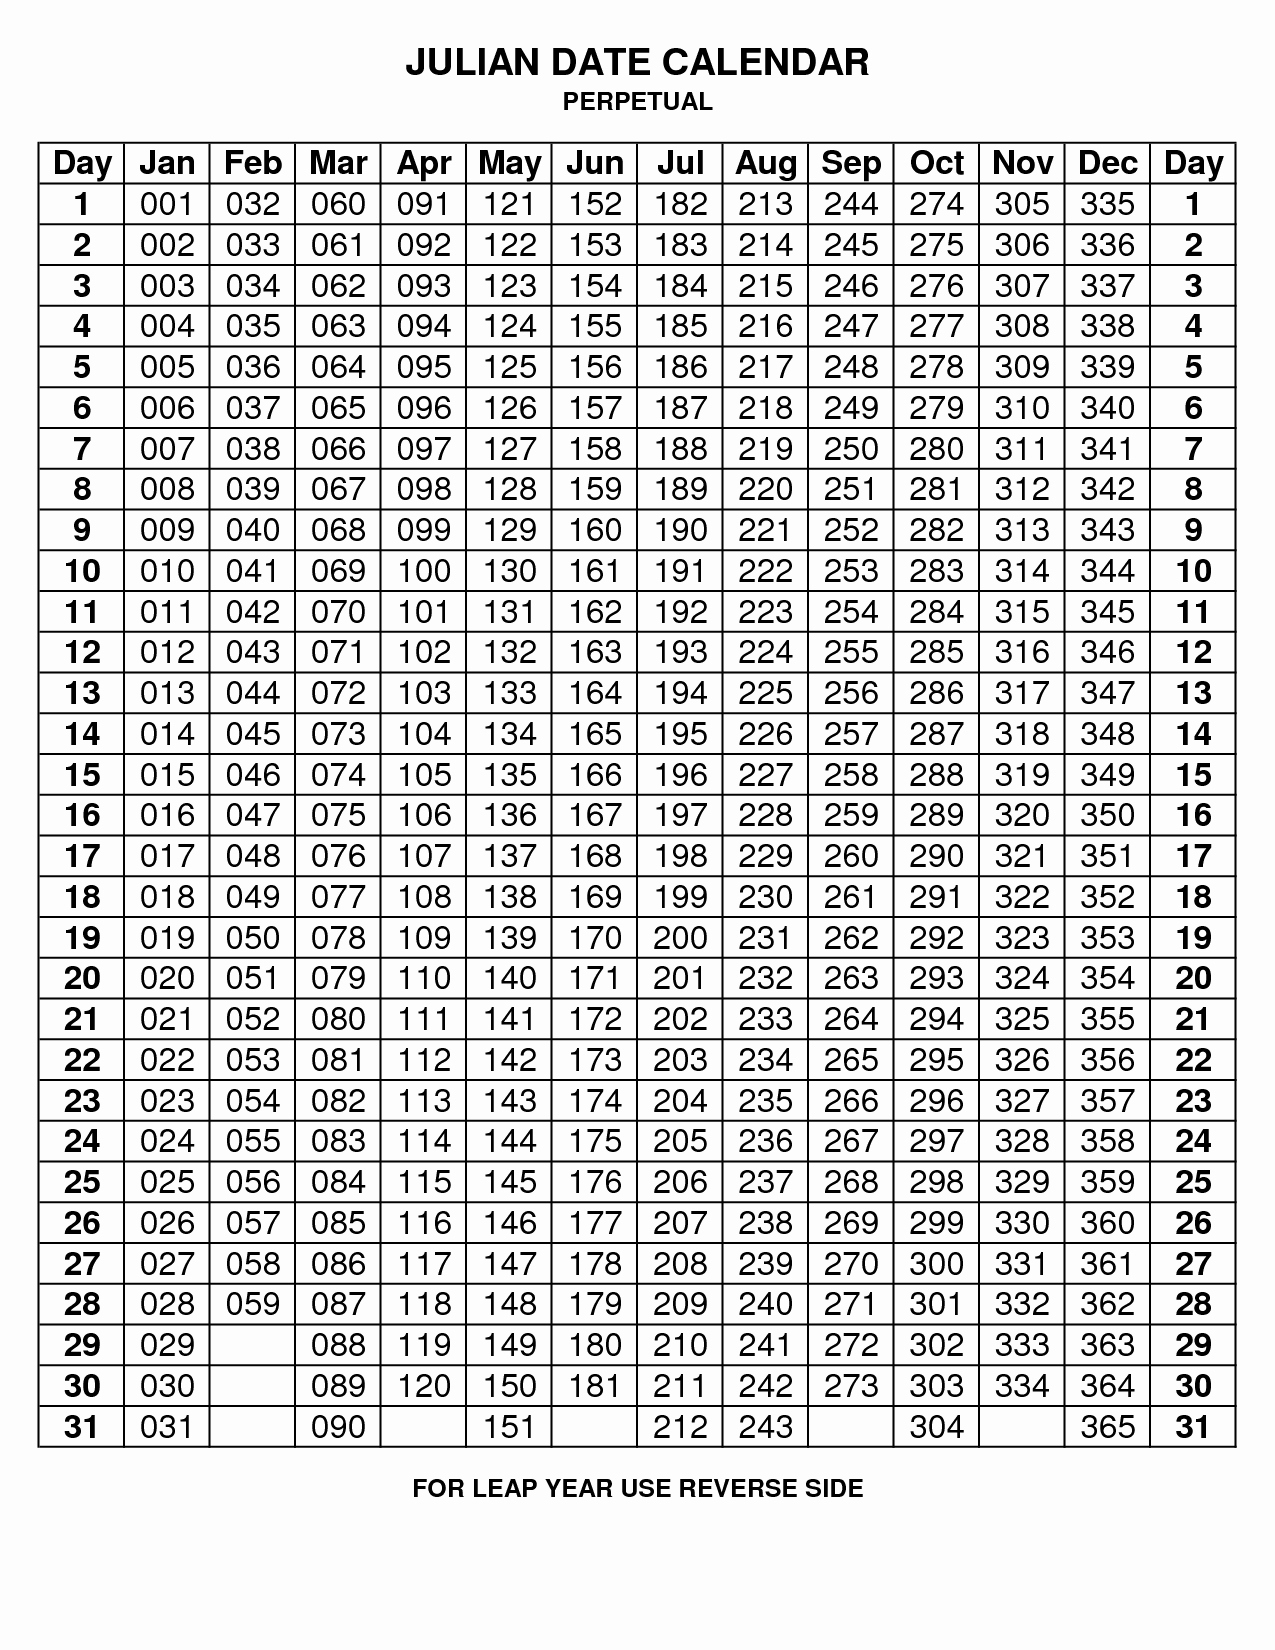 Depo Provera Perpetual Calendar To Print - Calendar  Depo-Provera Printable Calendar 2021 Pdf